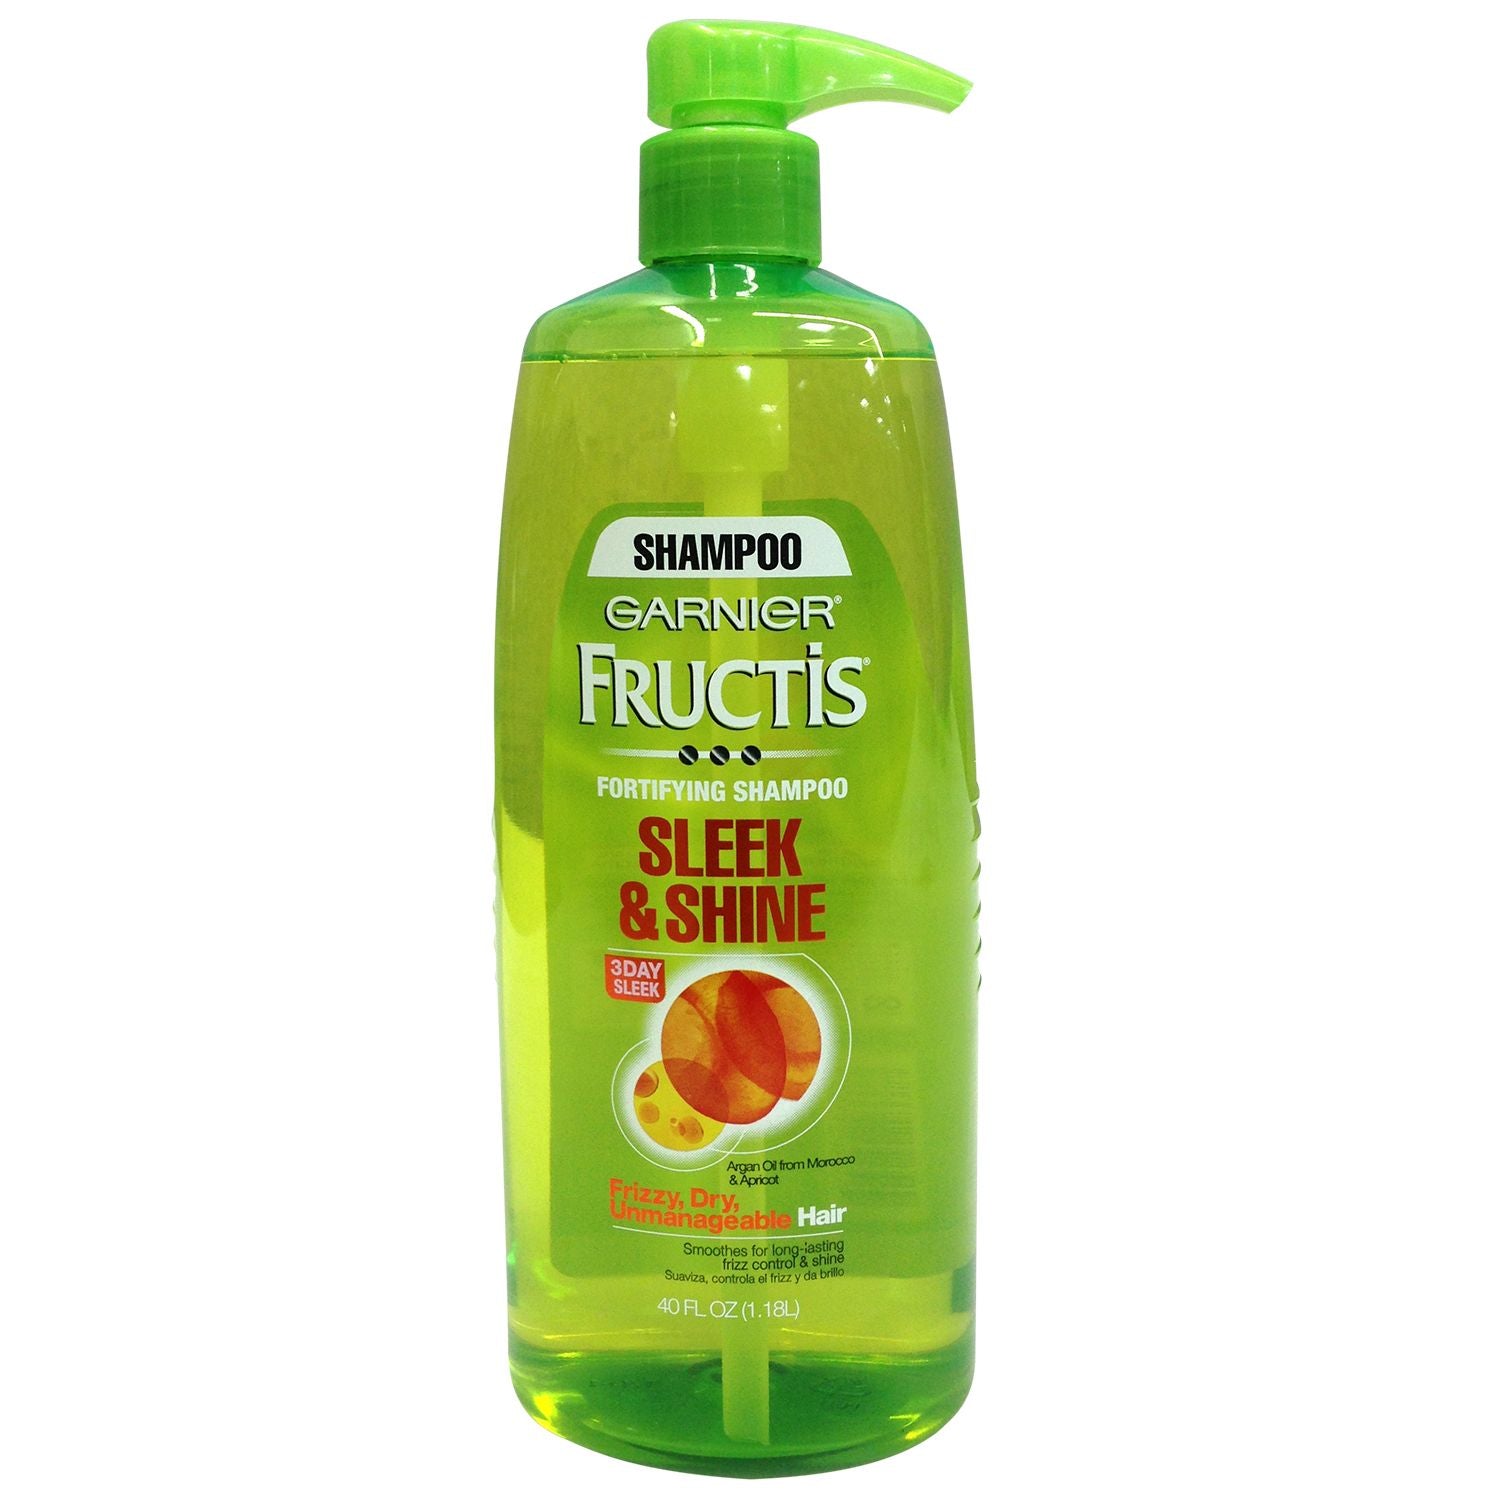 Garnier Fructis Sleek & Shine Shampoo Pump - 40oz/1pk